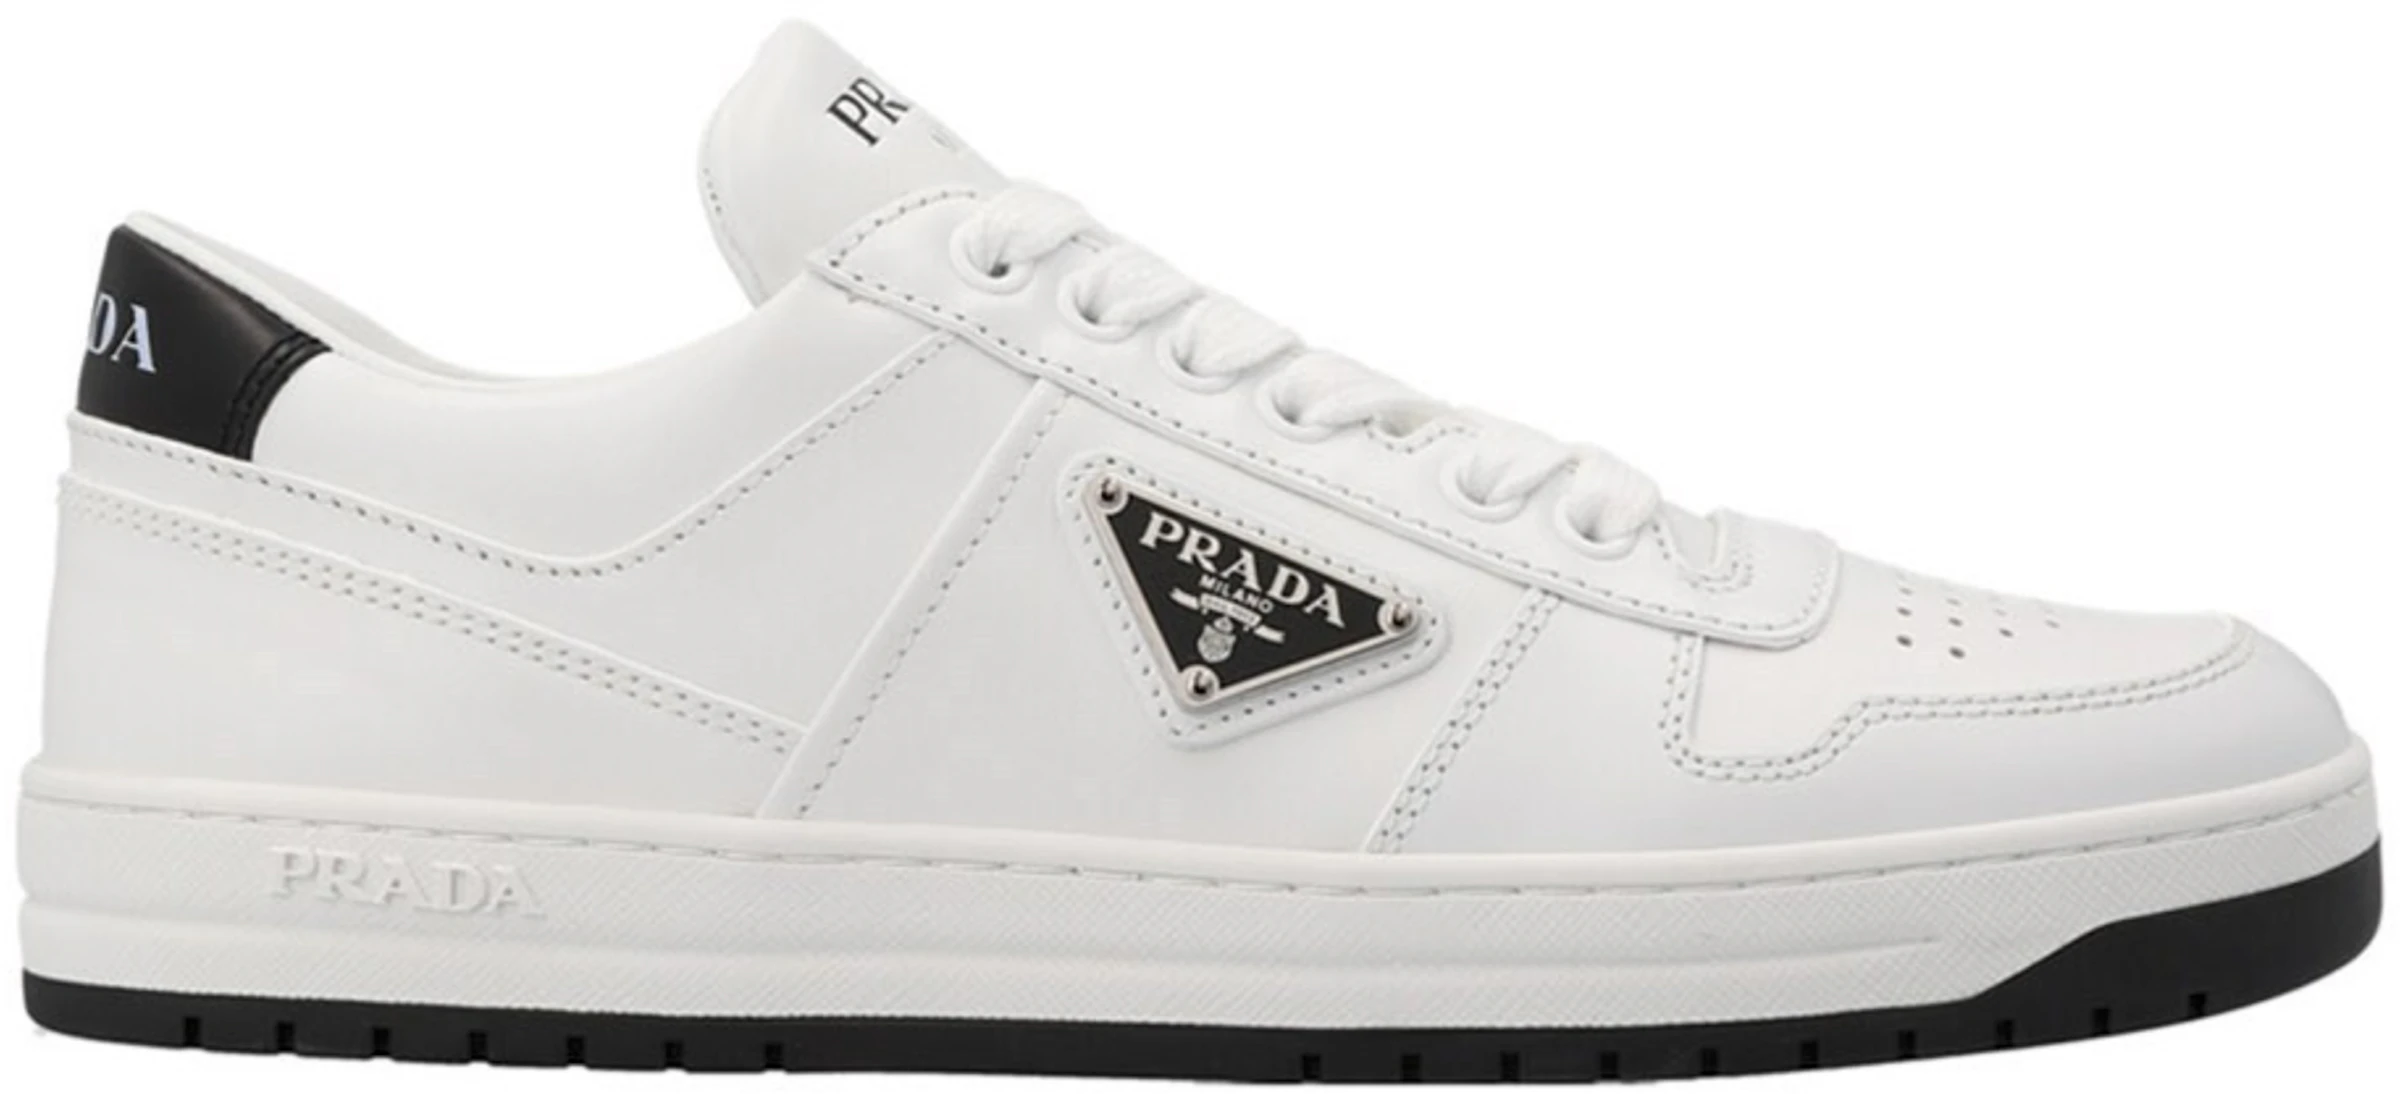 Prada Downtown Low Top Sneakers Leather White White Black (Women's) -  1E792MF0303LJ6-F0964 - US